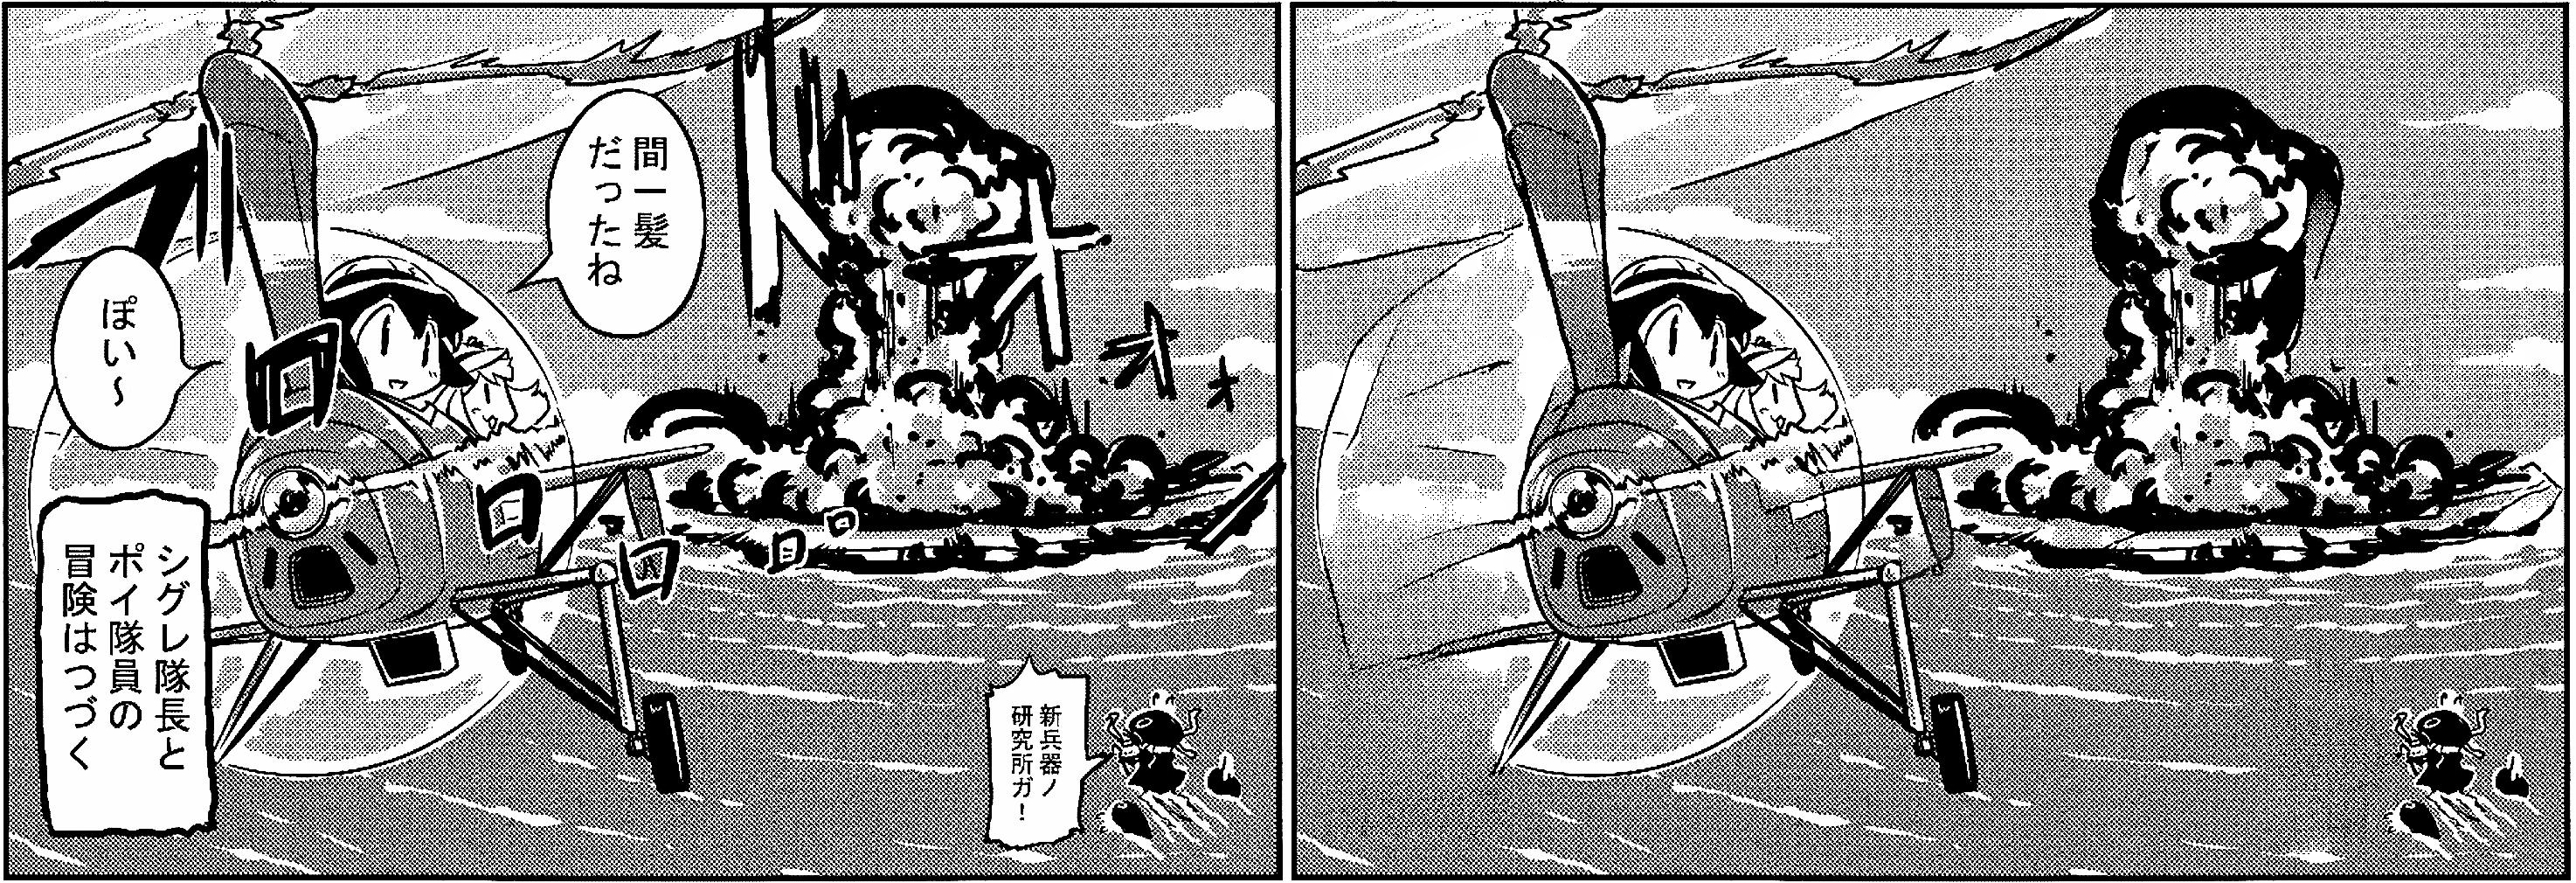 Seamless 漫画の吹き出しや効果音を自然に消す技術 T Co Naosx7aikx 漫画 を日本語から英語に翻訳する際 吹き出しや効果音の文字数や大きさが違う為 一旦効果音や吹き出しごと消して新たに文字を導入する その際に背景と調和した塗りつぶしを行う